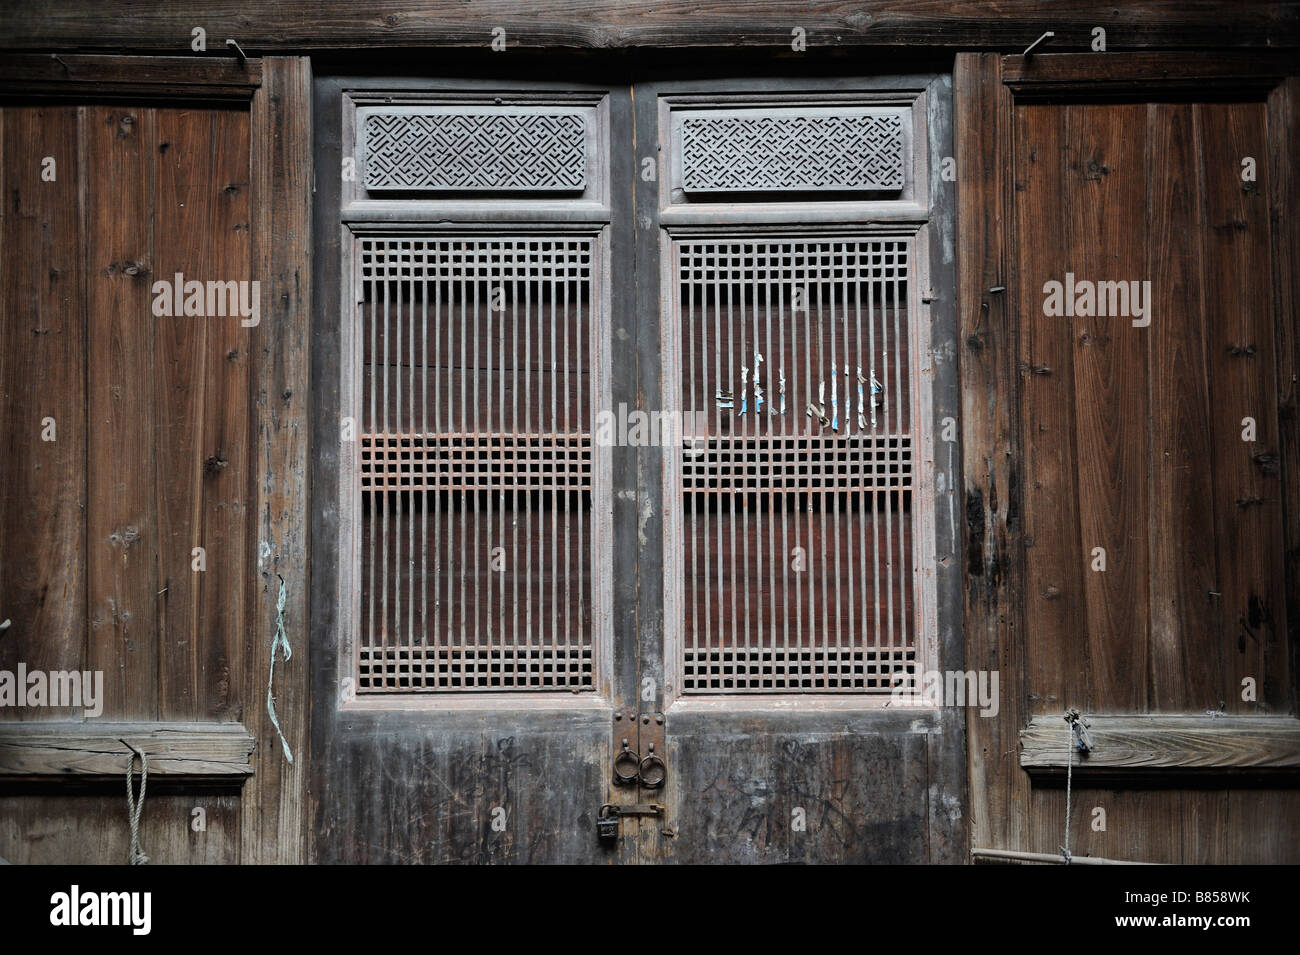 Cinese antichi di legno intagliato di windows in una dinastia Qing edificio in Yifeng, Jiangxi, Cina. Foto Stock